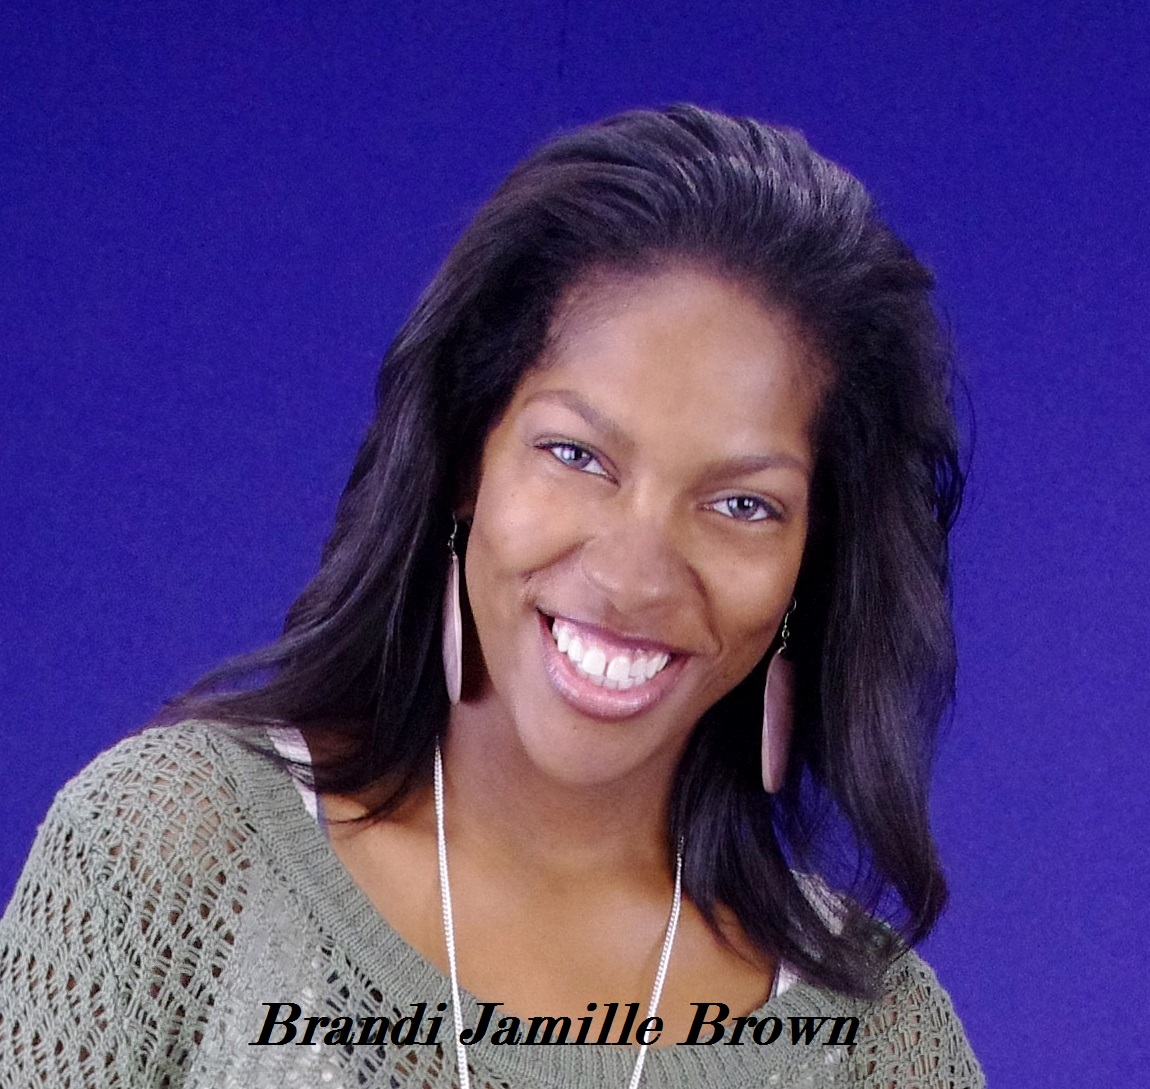 Brandi Jamille Brown